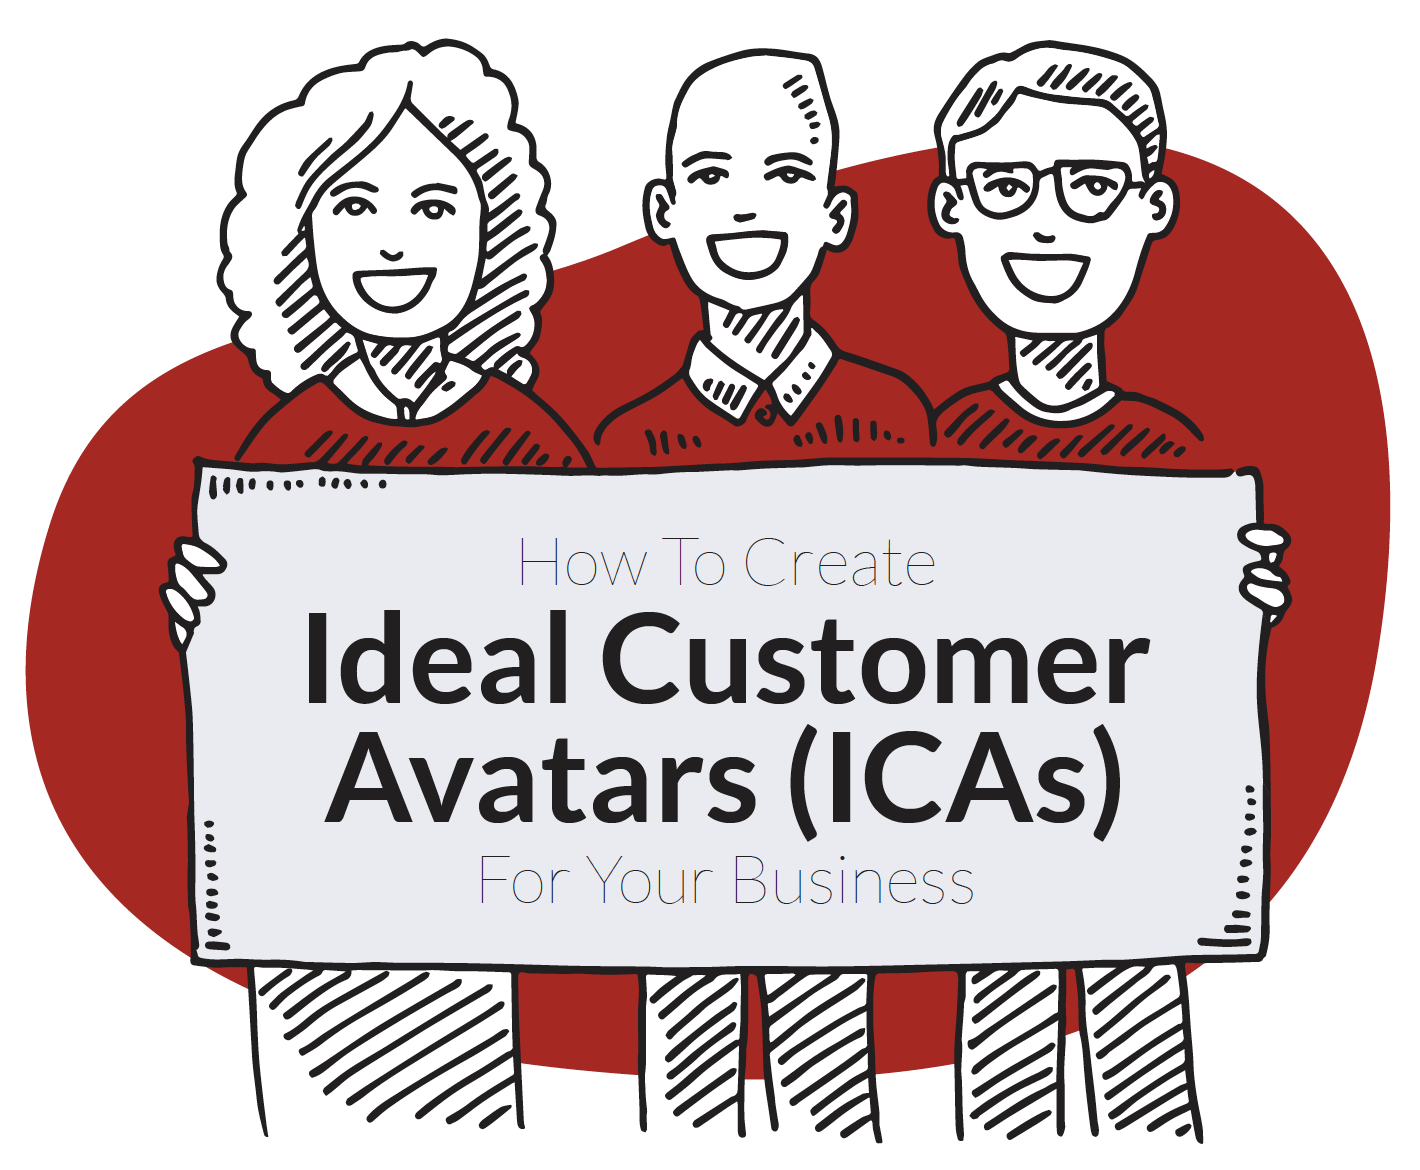 How to create Ideal Customer Avatars (ICAs) with bonus free template